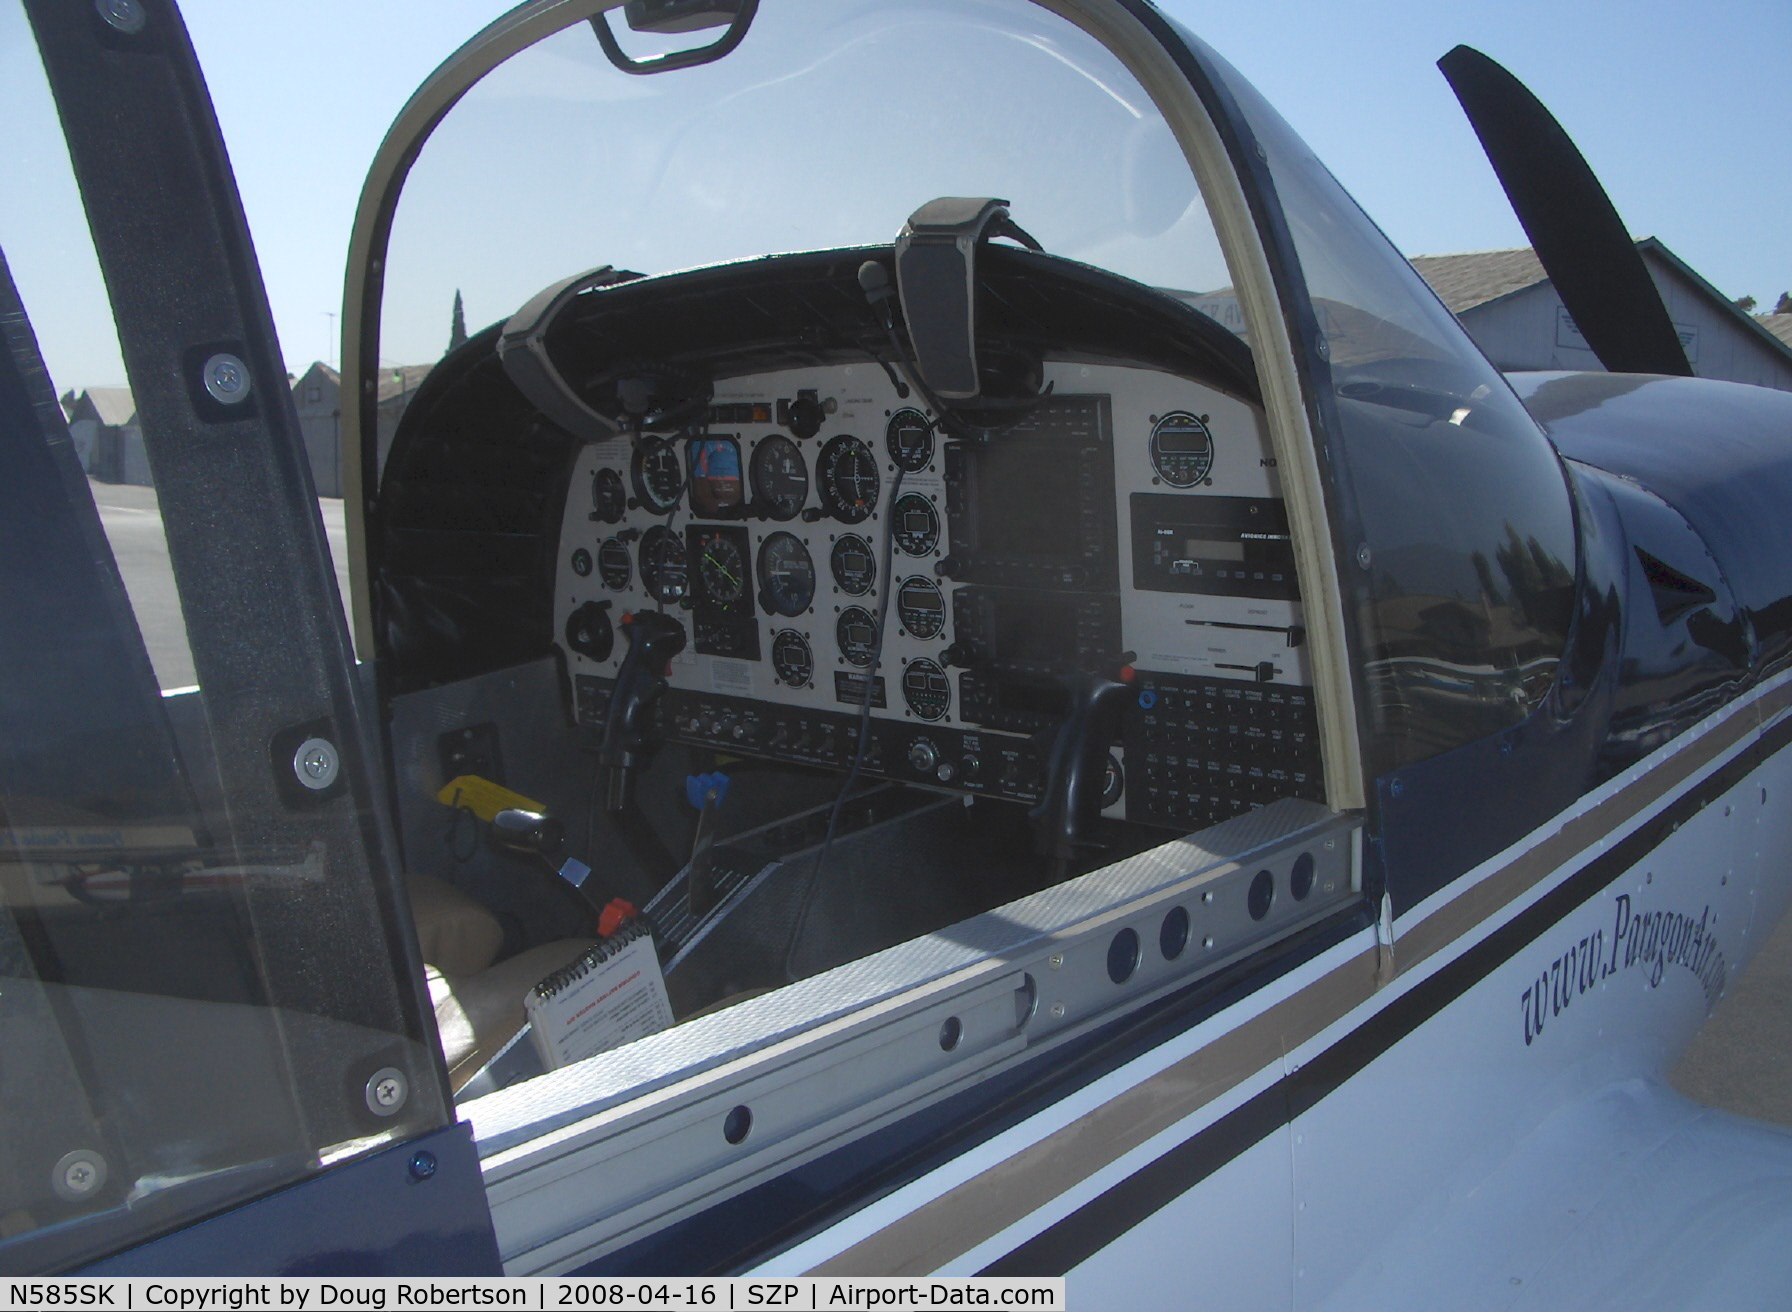 N585SK, 2003 Lanshe Aerospace Llc MAC-145B C/N 260013, 2003 Lanshe Aerospace LLC MAC-145B (Micco SP26A for Aerobatic), Lycoming IO-540-T4B5 260 Hp, good panel-partial glass panel